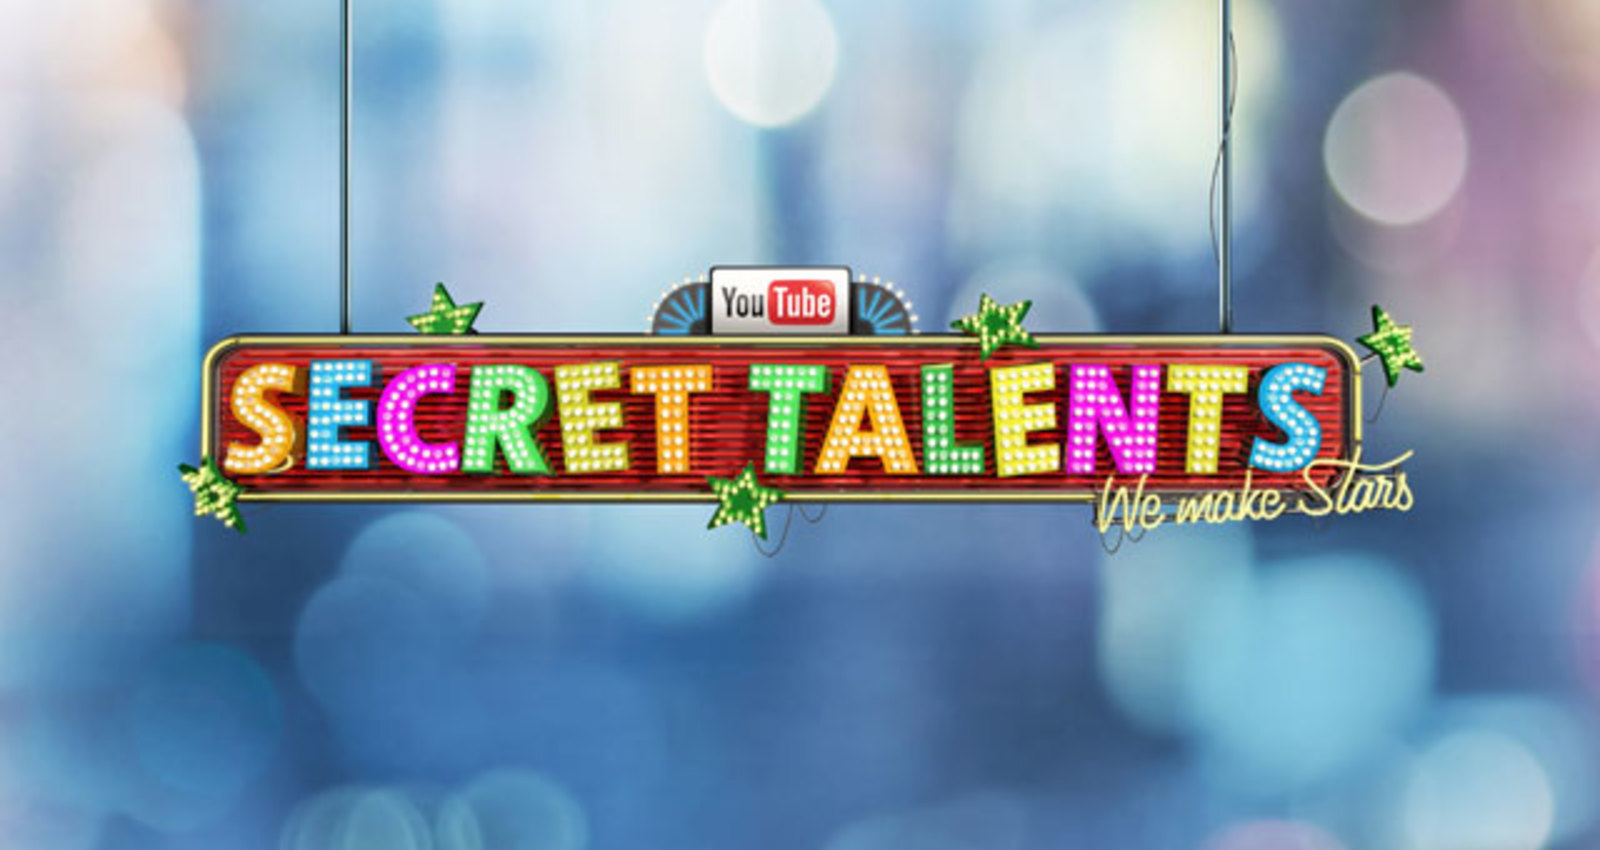 YouTube Secret Talents